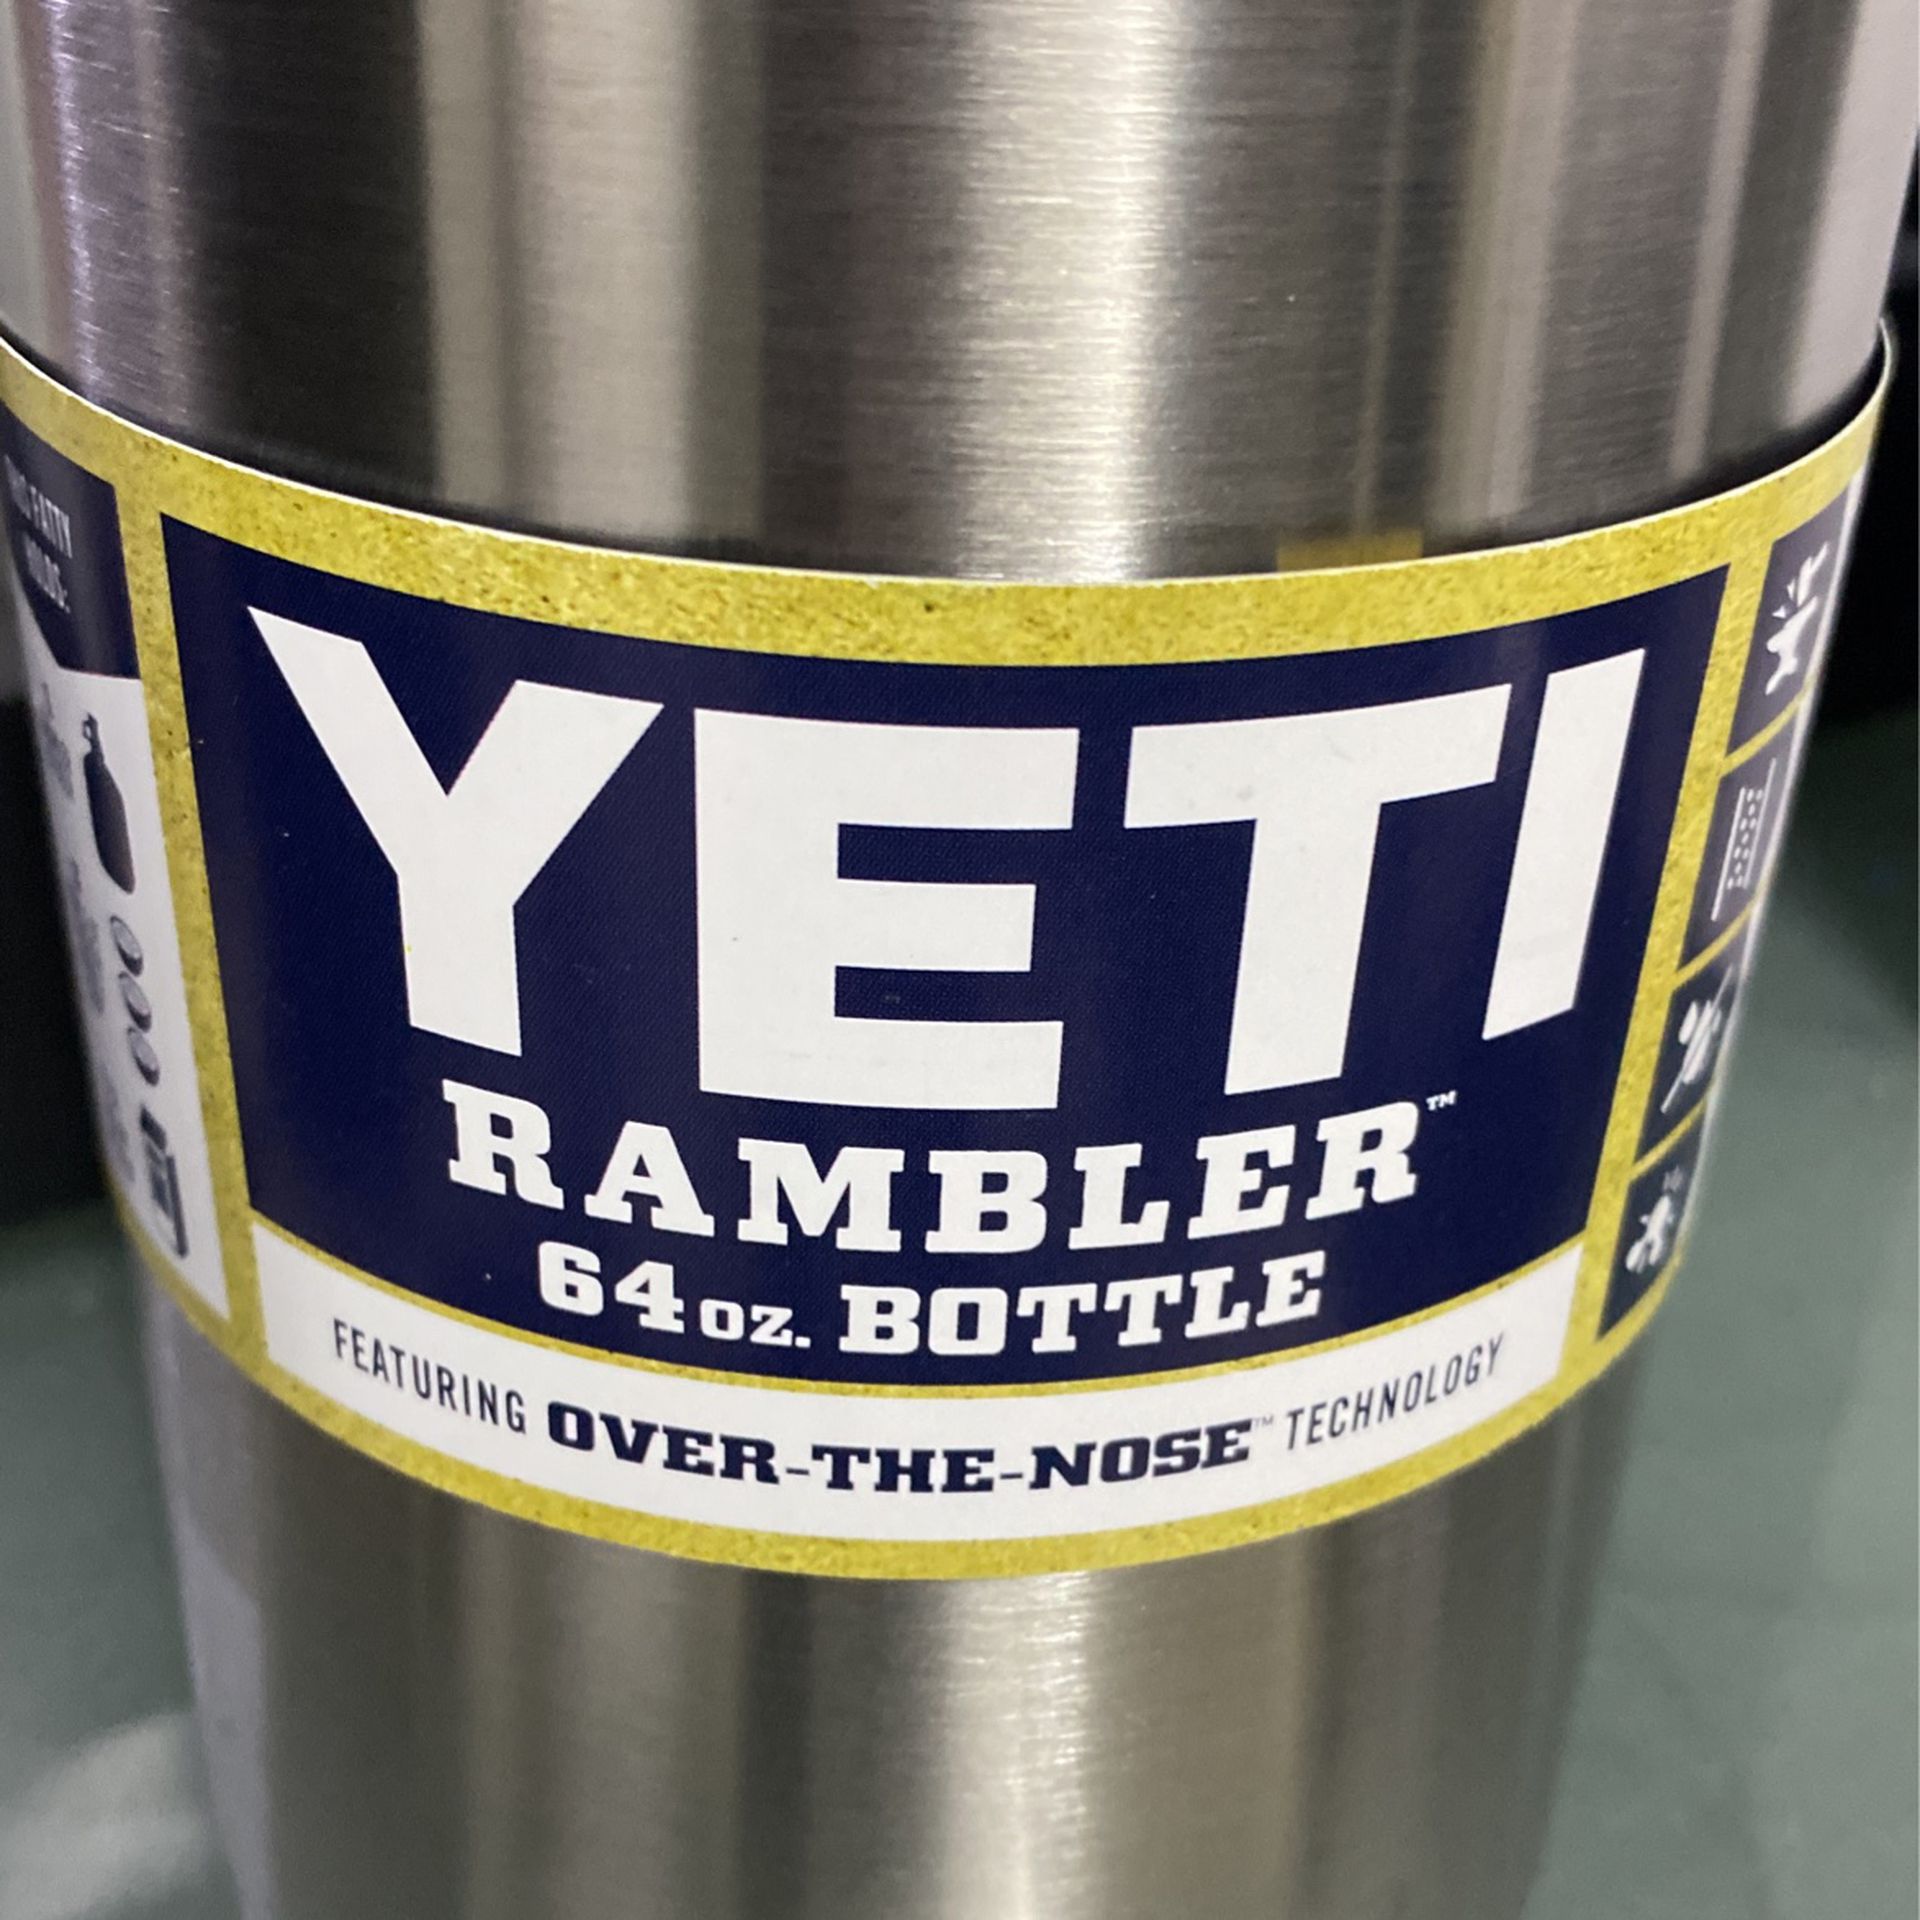 Yeti Rambler 24 Oz Mug (4) for Sale in Fresno, CA - OfferUp